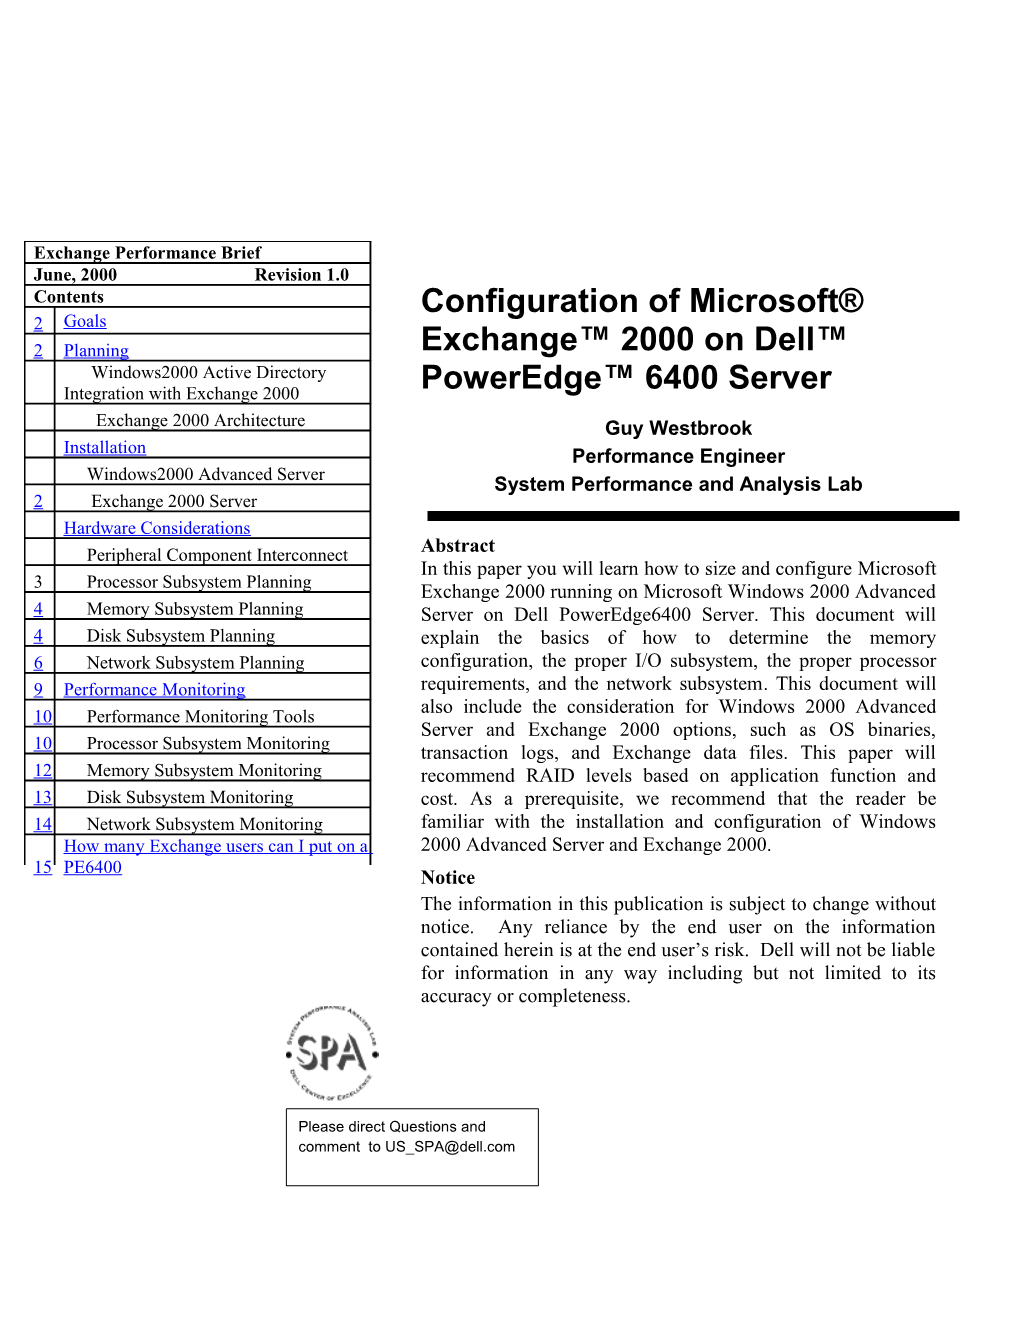 Configuration of Microsoft Exchange 2000 on Dell Poweredge 6400 Server